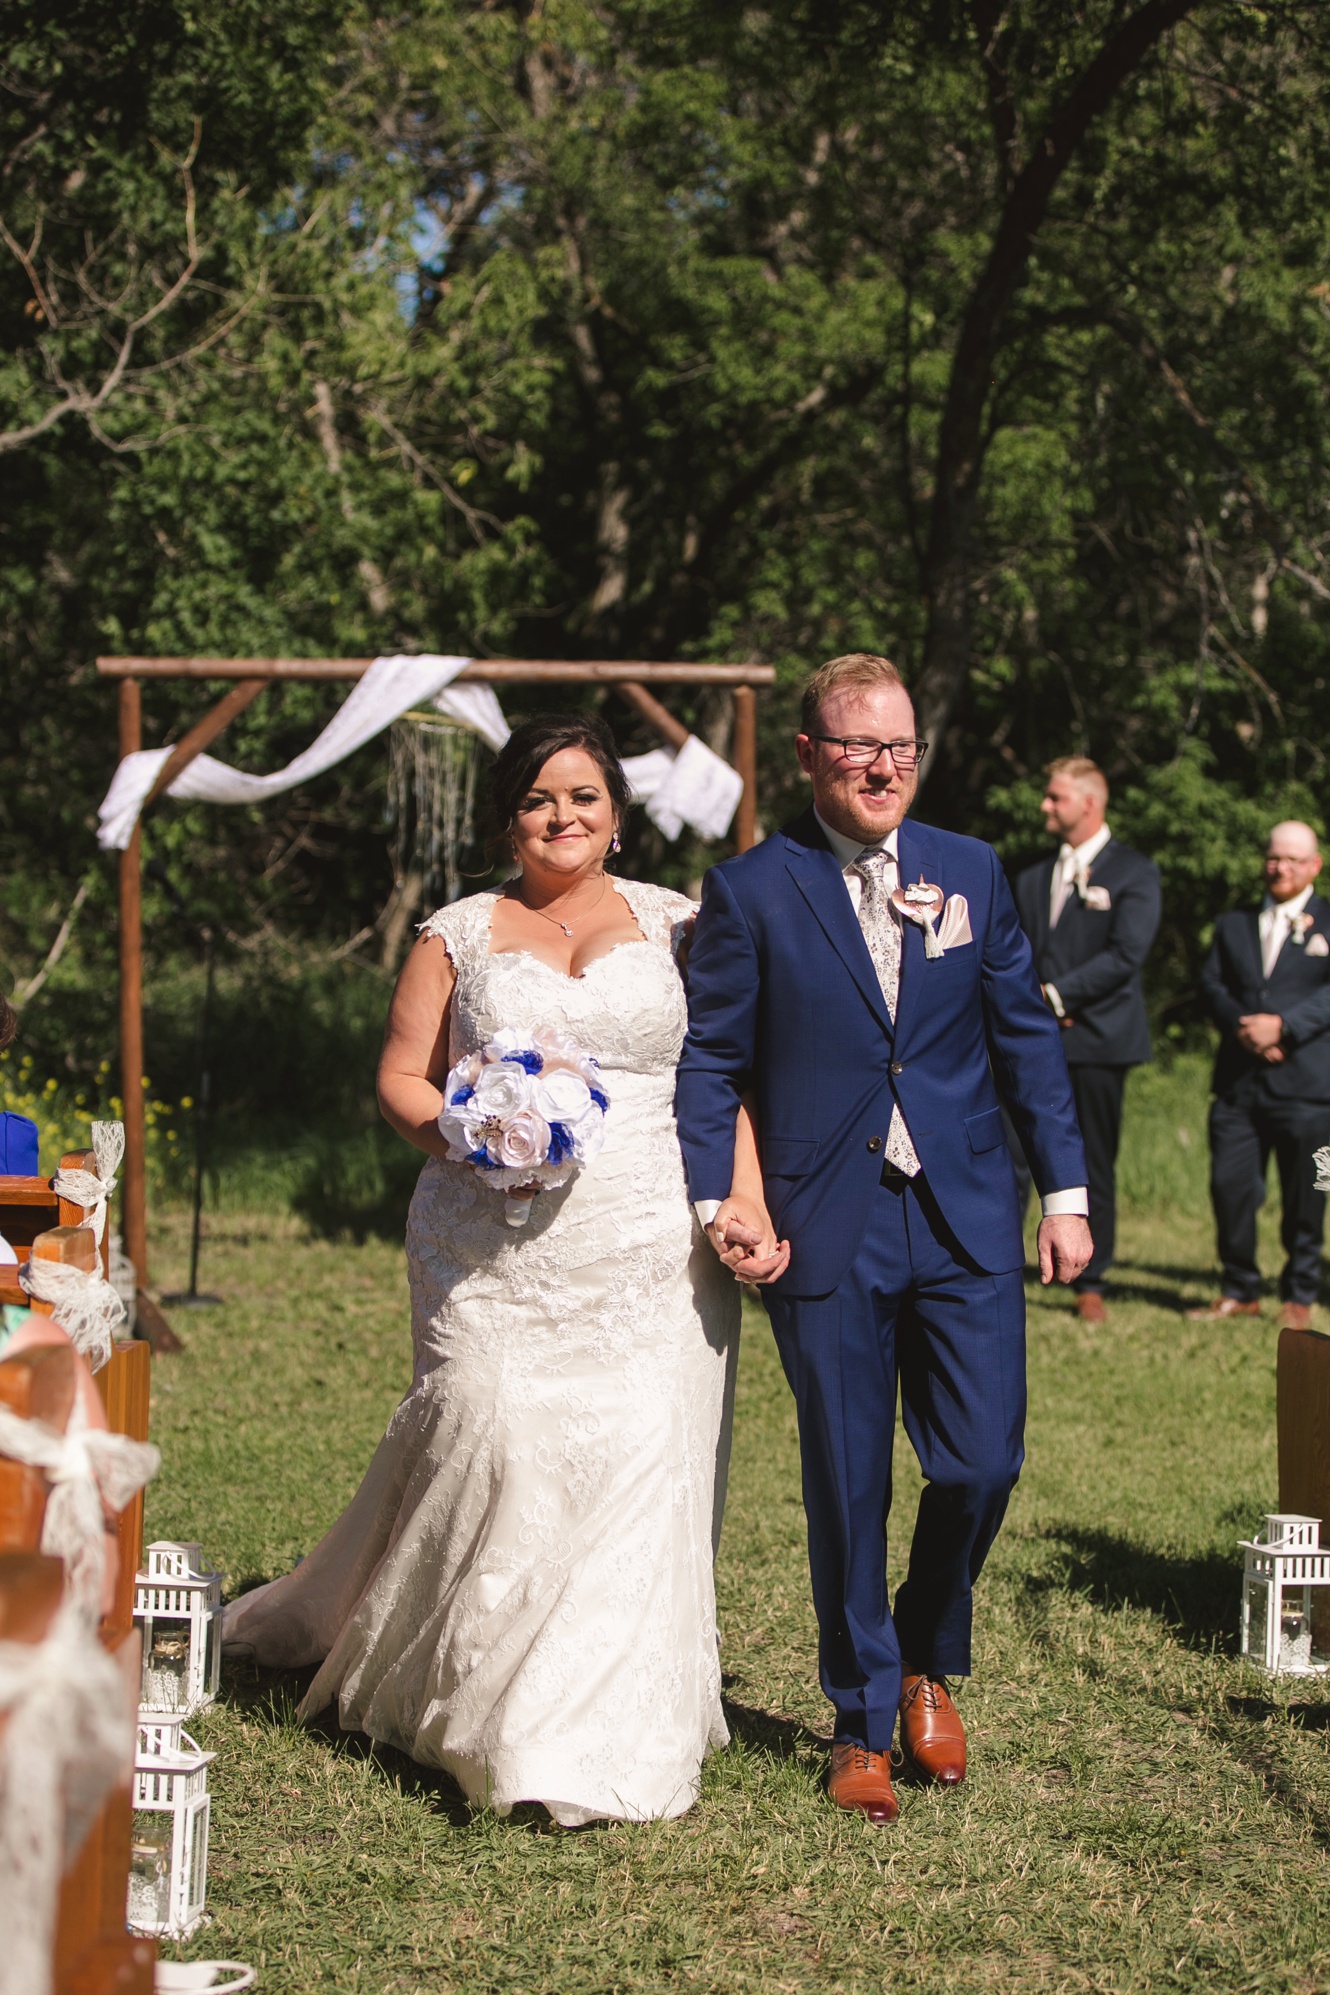 Camp O’Neill Wedding at Round Lake